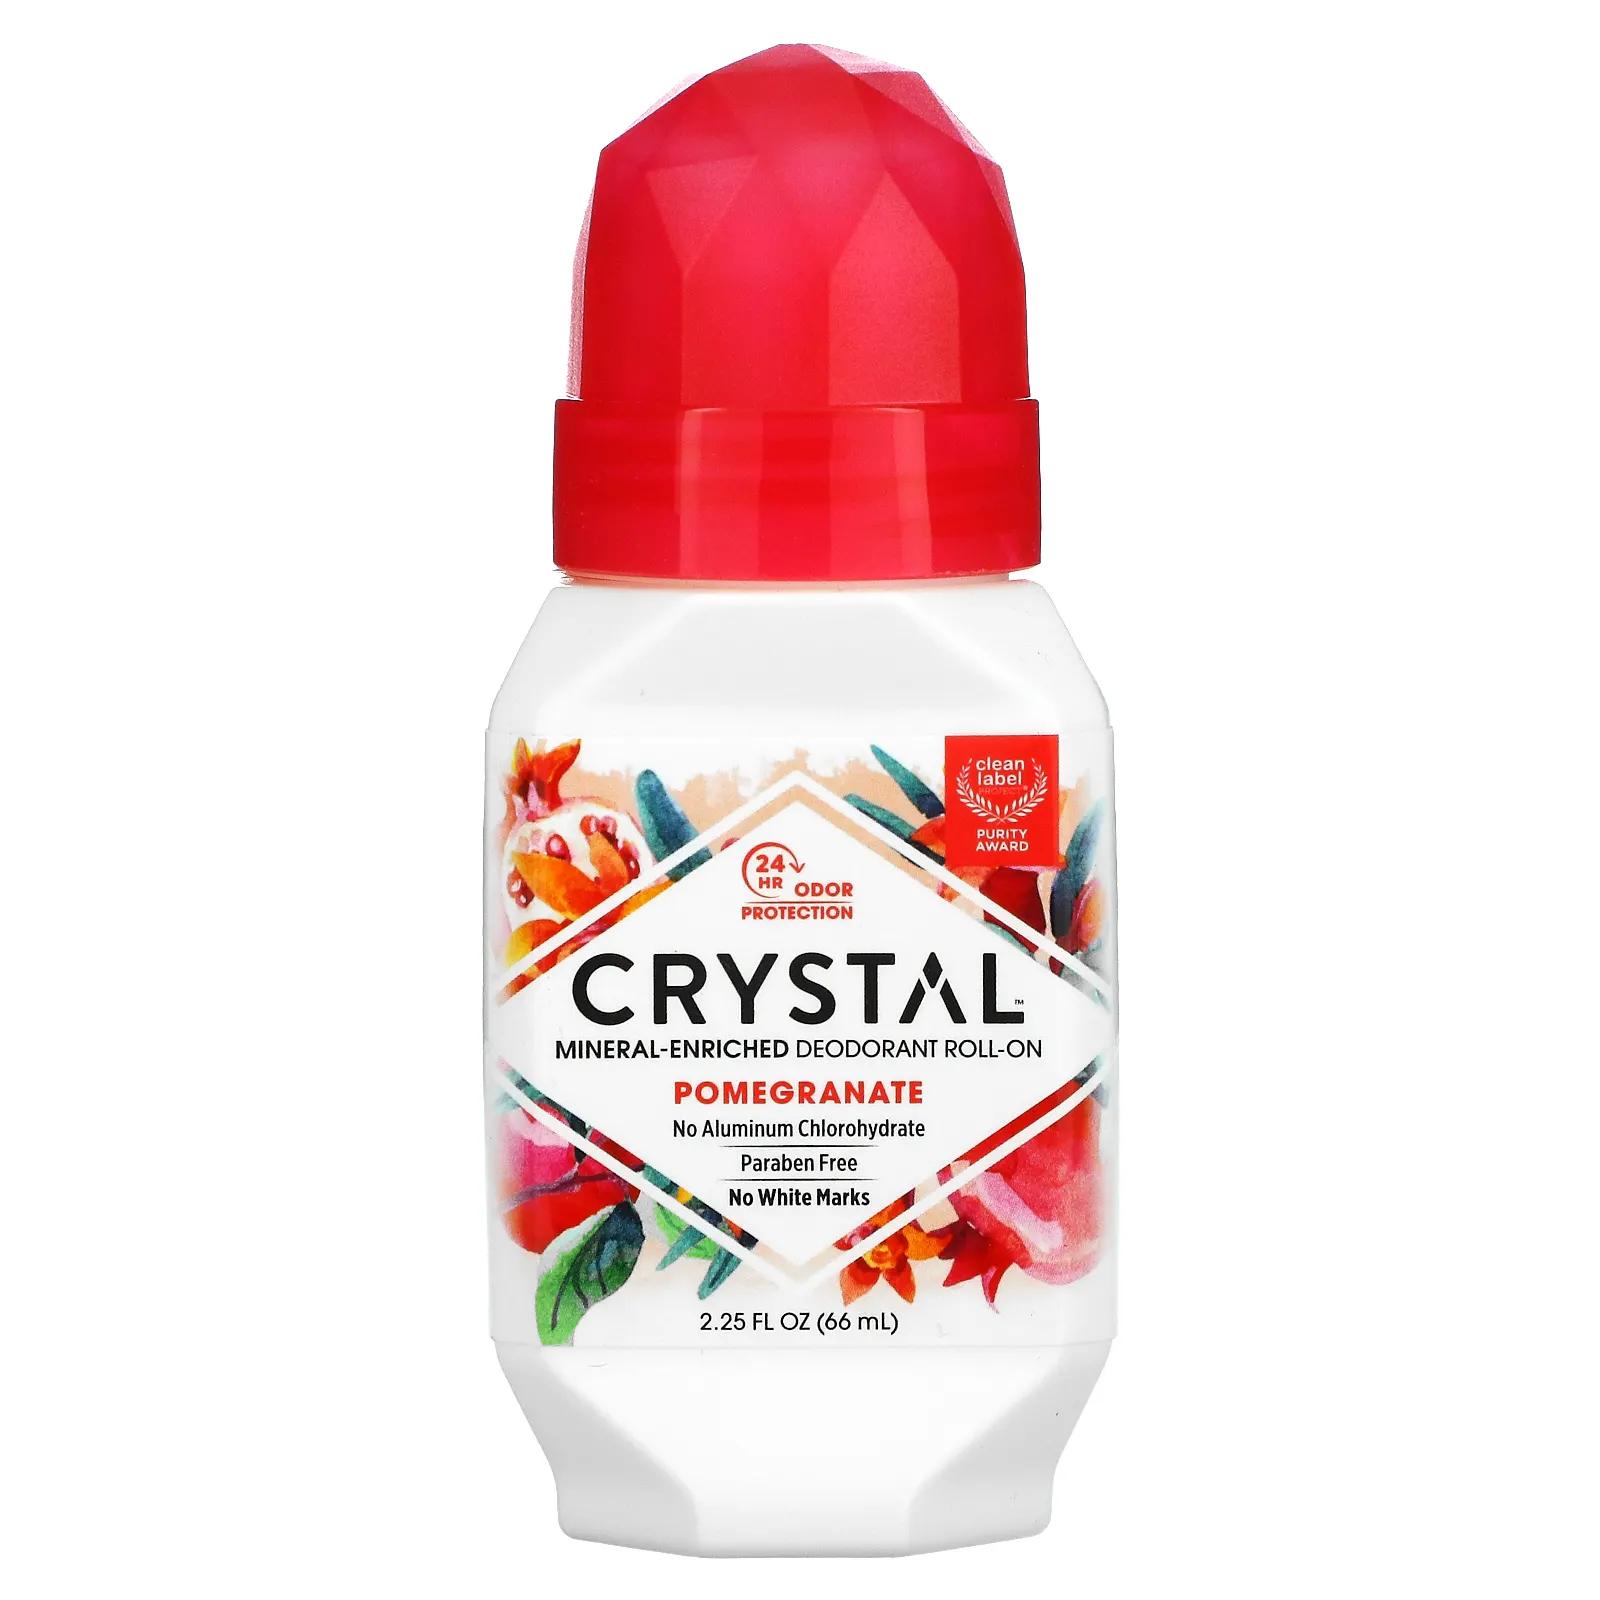 Crystal Body Deodorant Натуральный роликовый дезодорант гранат 2,25 ж.унц. (66 мл)